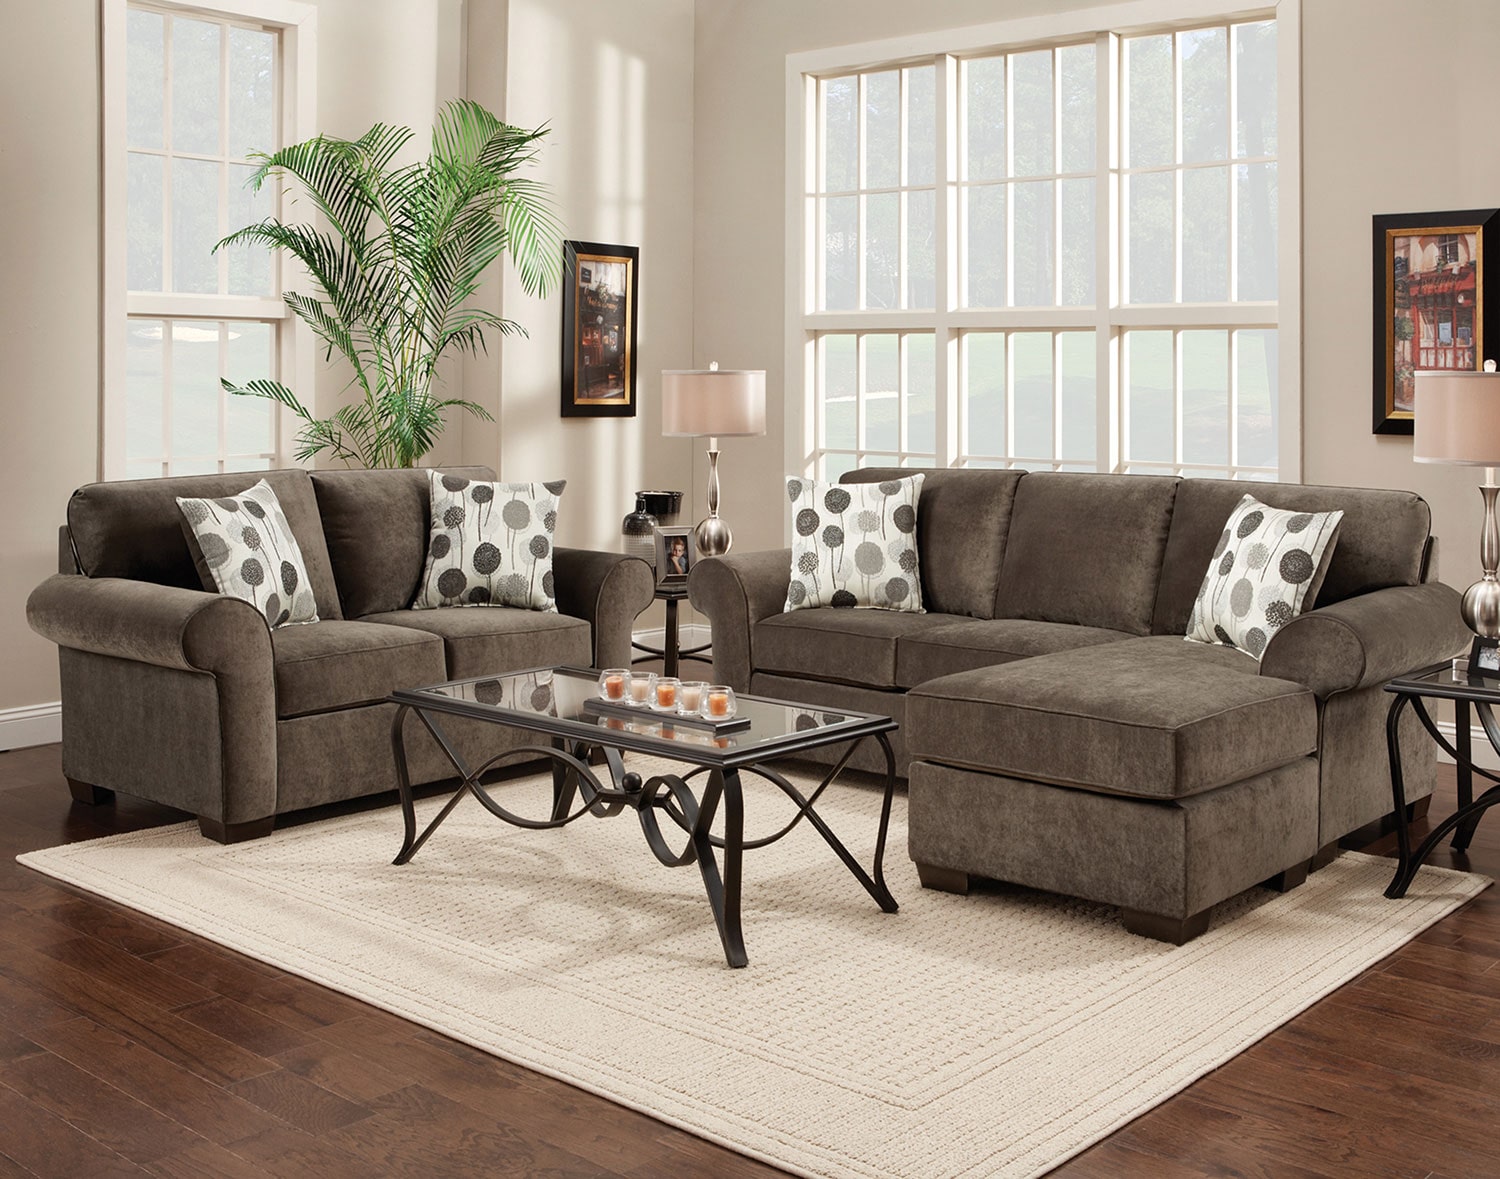 Levin Furniture Living Room Sets  Zion Star